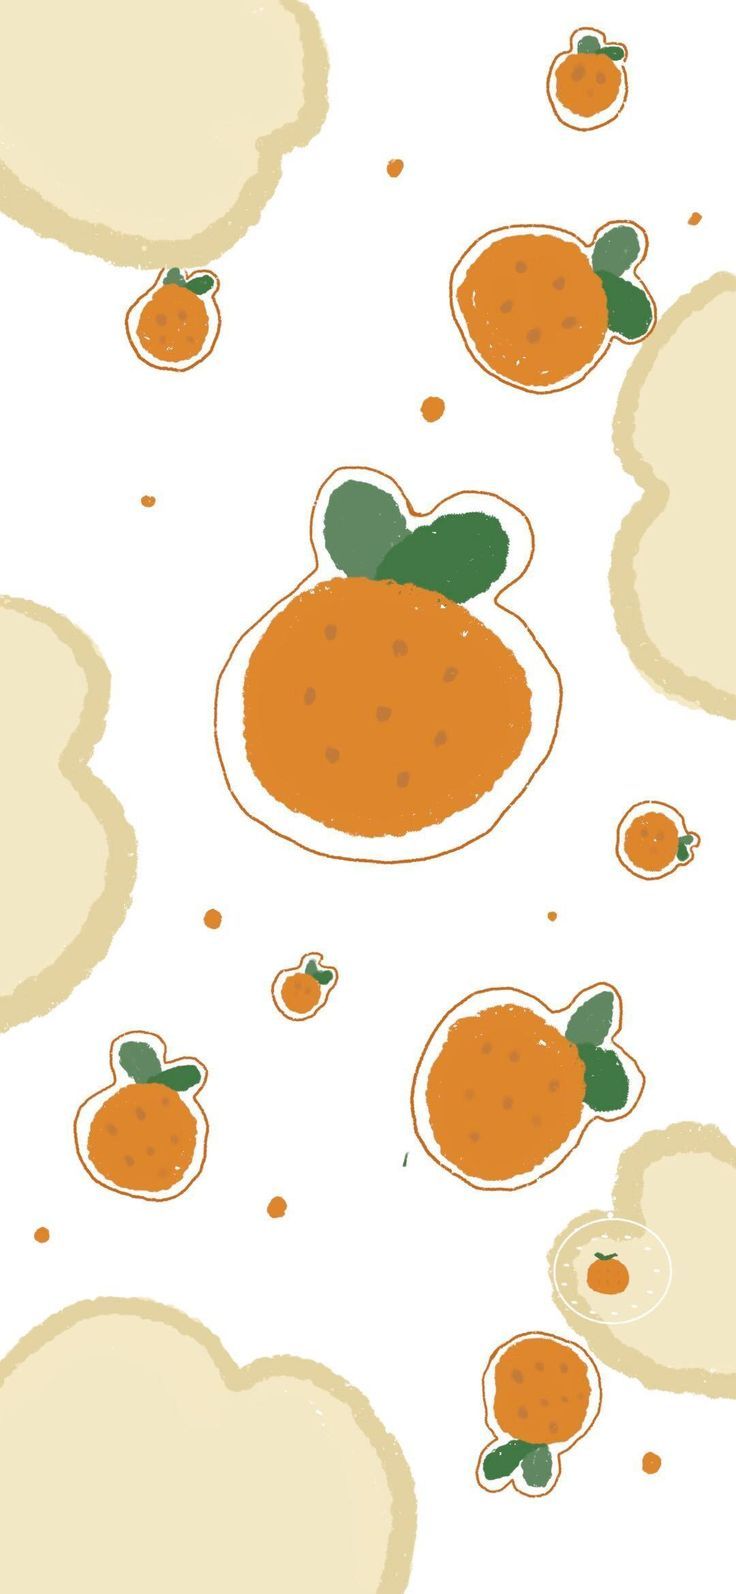 Illustration of a group of oranges - Fruit